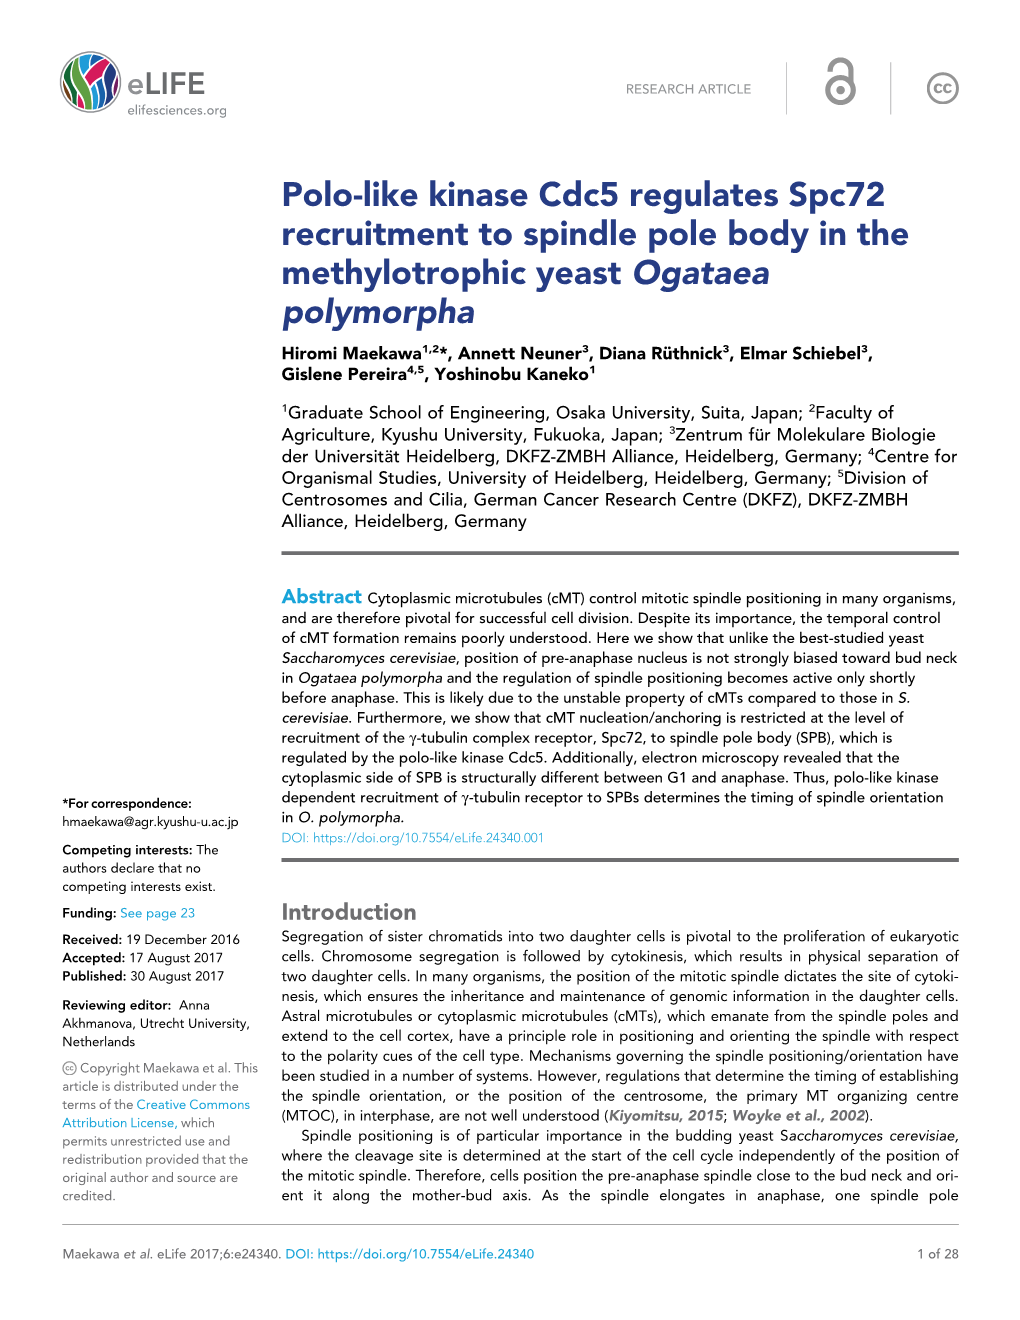 Polo-Like Kinase Cdc5 Regulates Spc72 Recruitment to Spindle Pole